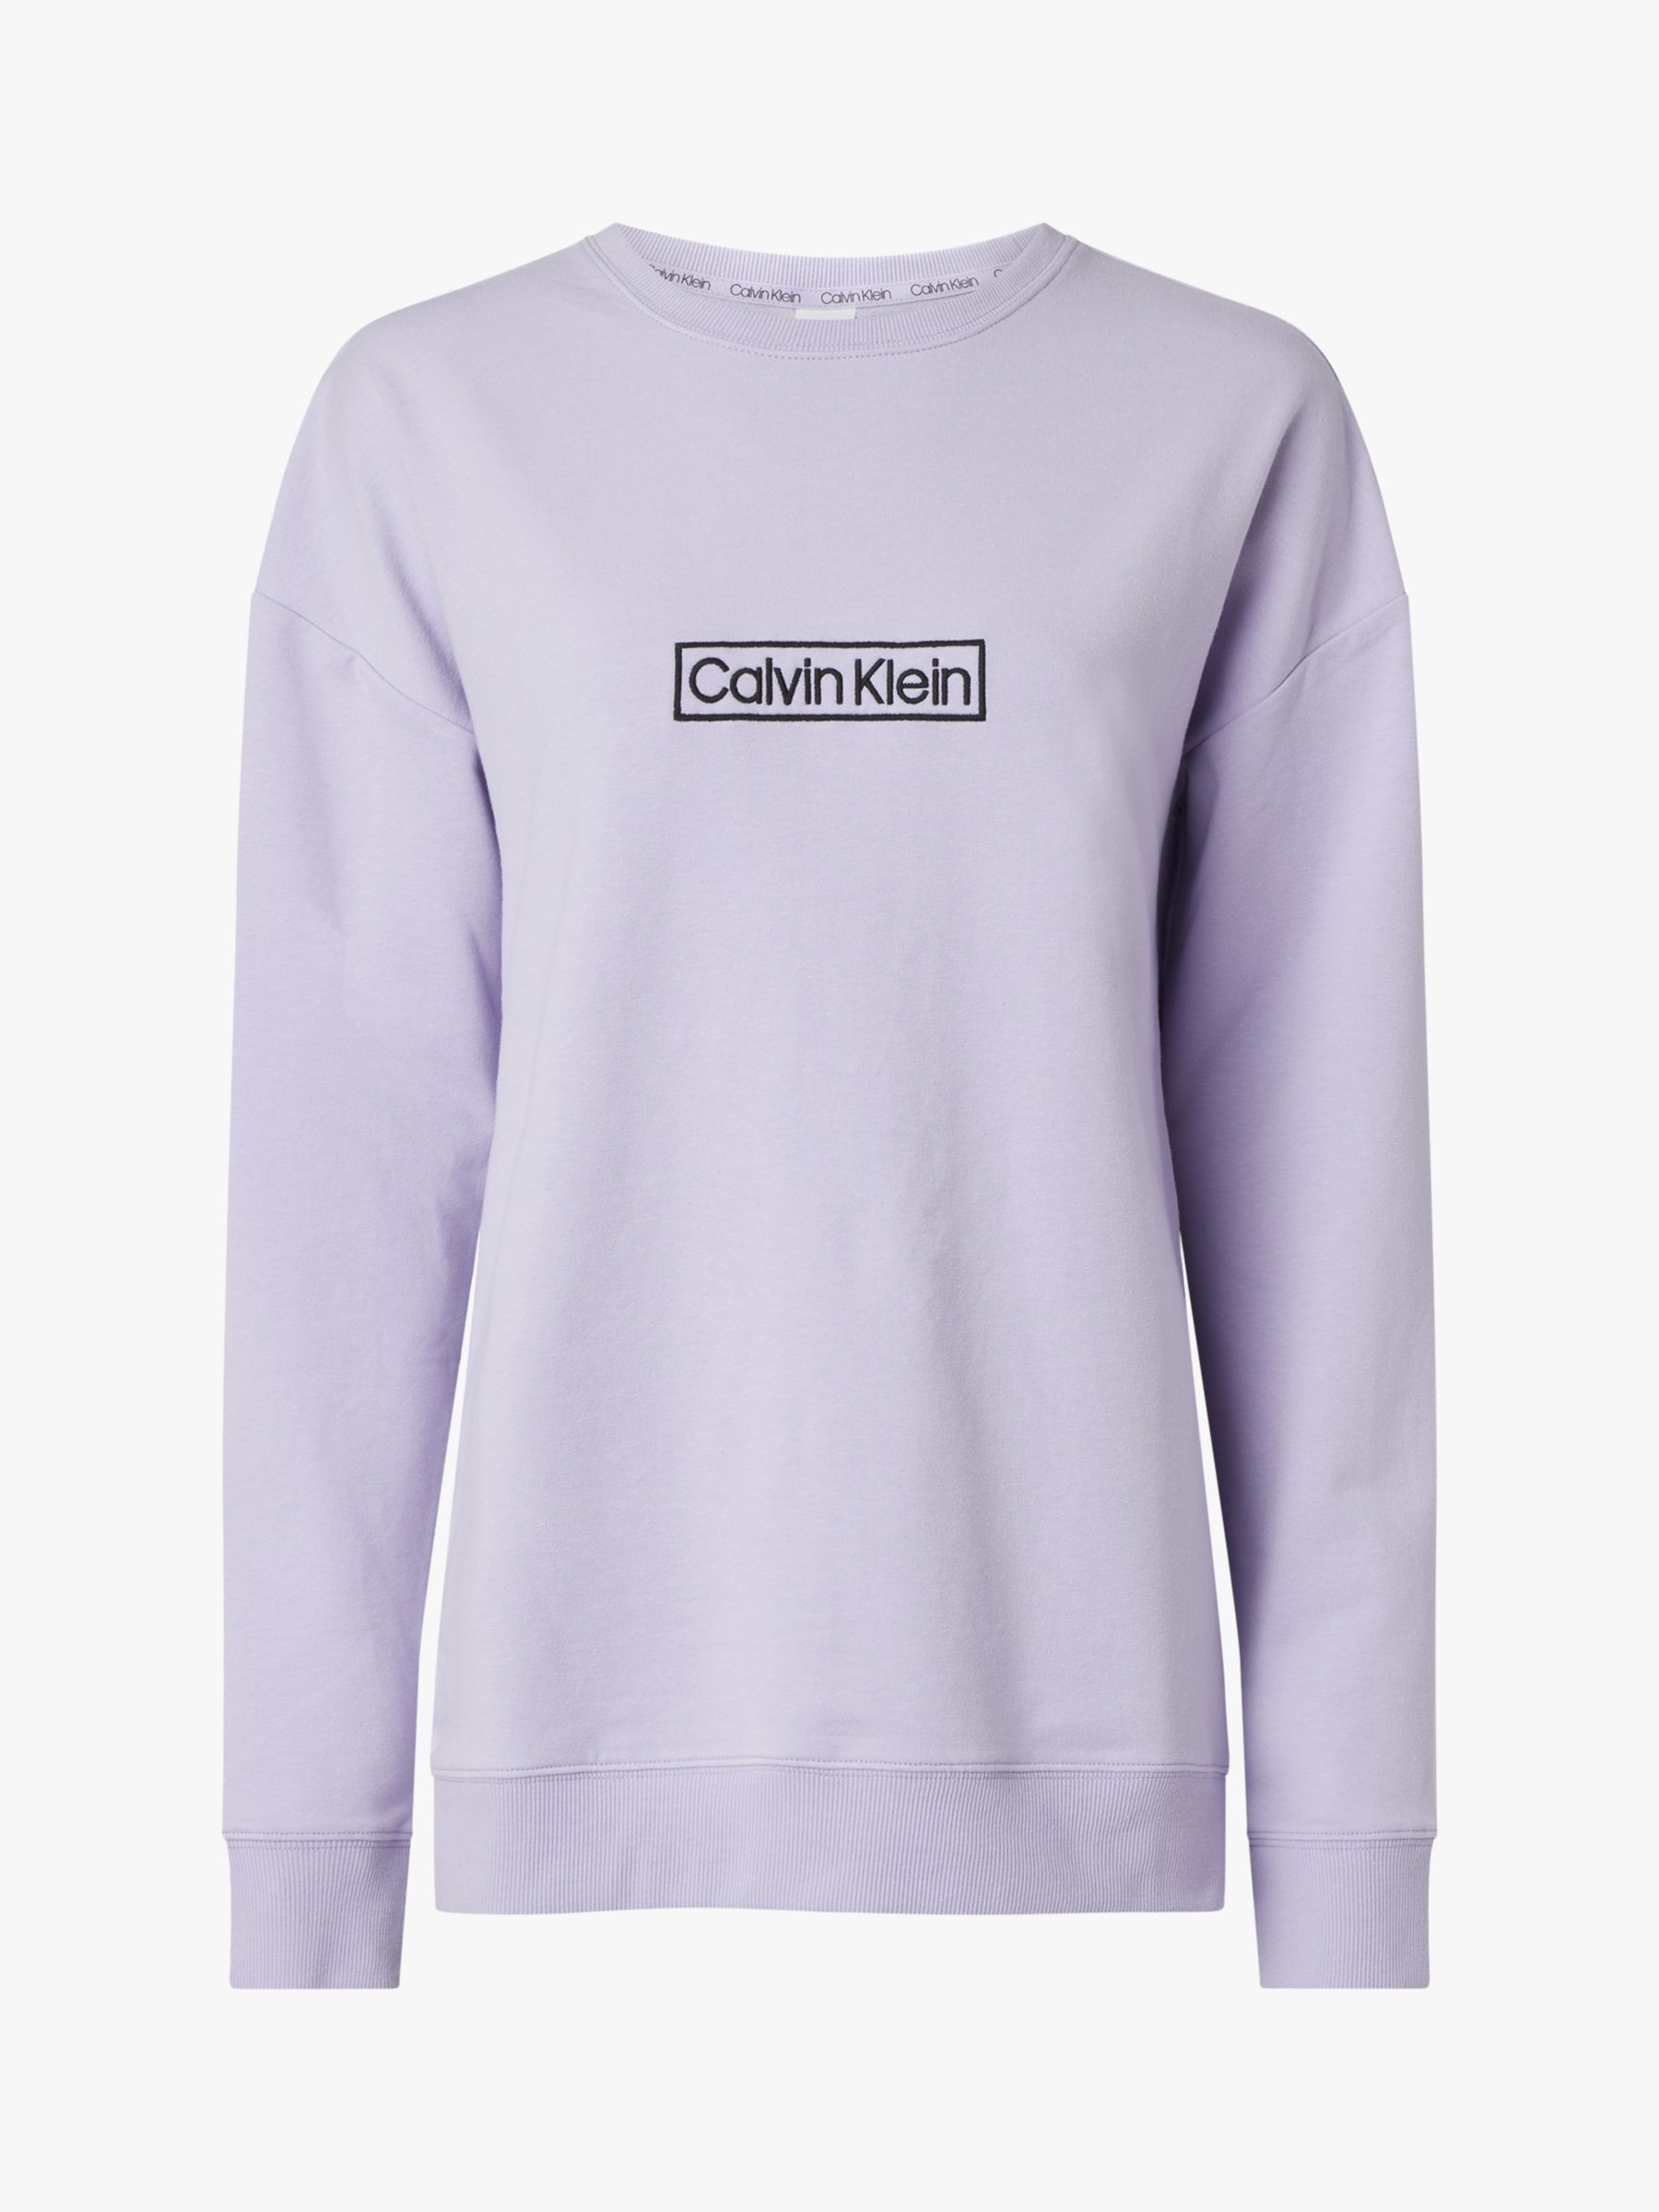 Calvin Klein Reimagined Lounge Sweatshirt, Vervain Lilac at John Lewis ...